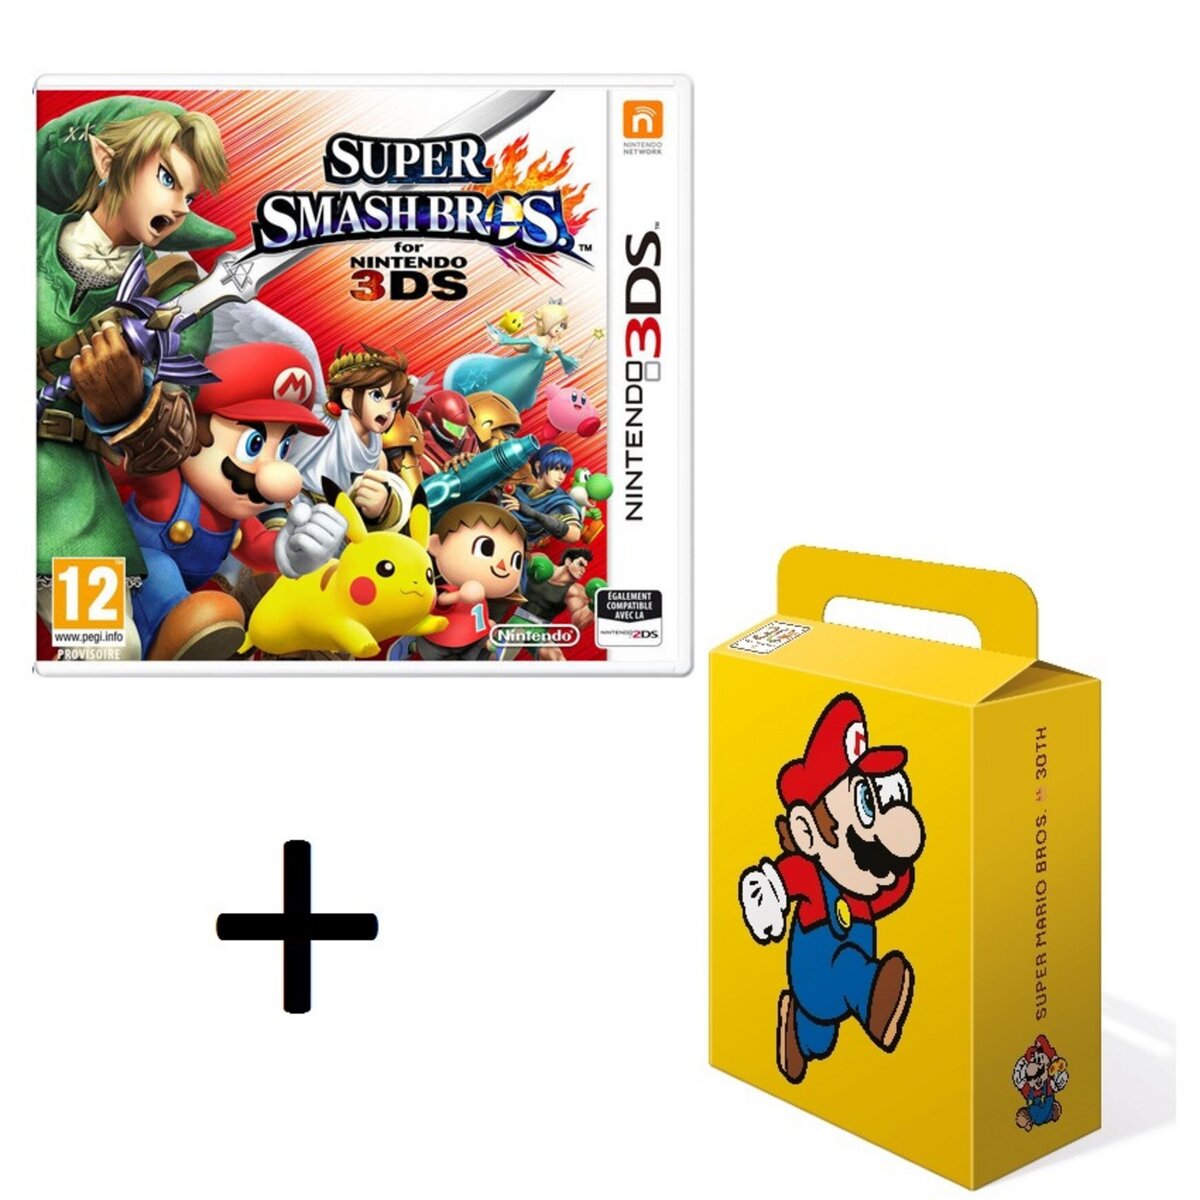 Super Smash Bros. 3DS + Boite cadeau "Mario" pour jeu 3DS